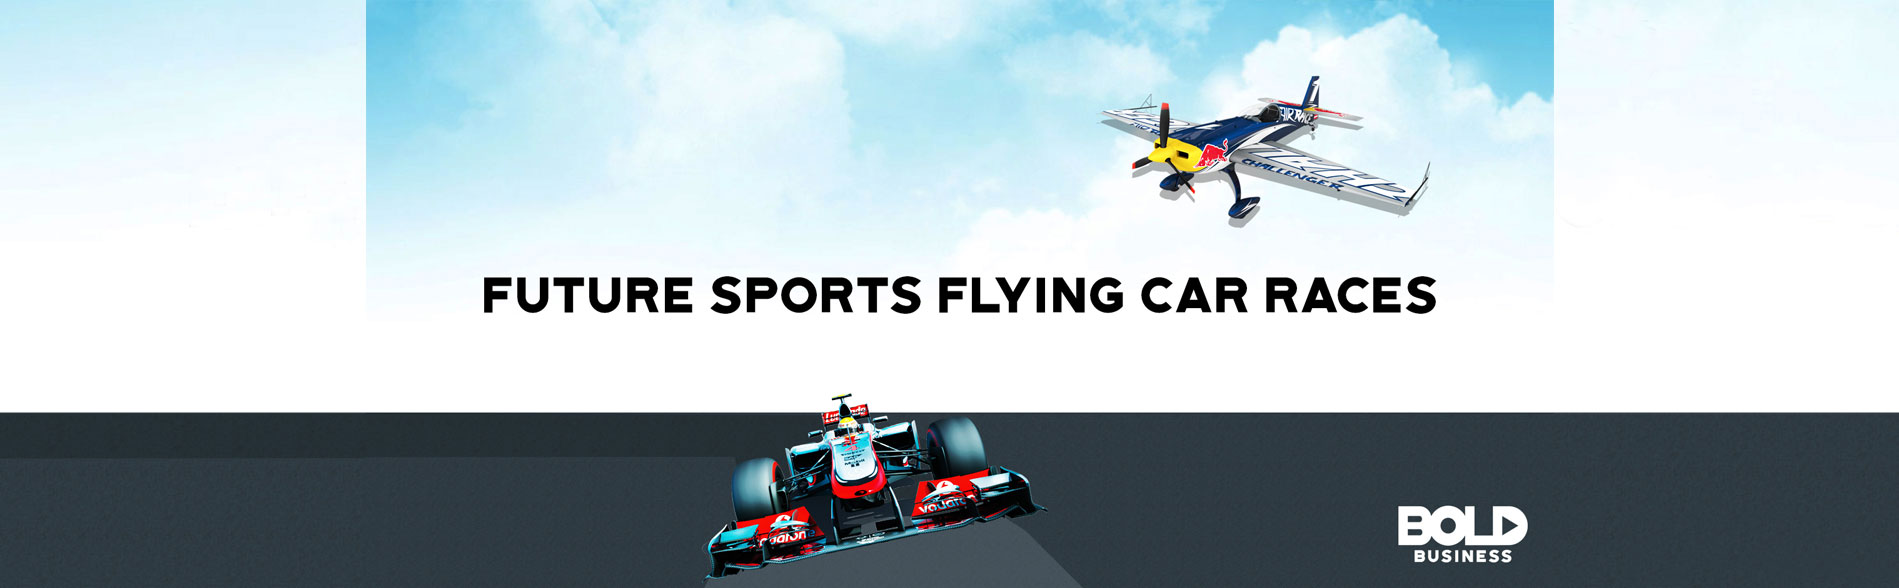 future flying car racing will take off soon